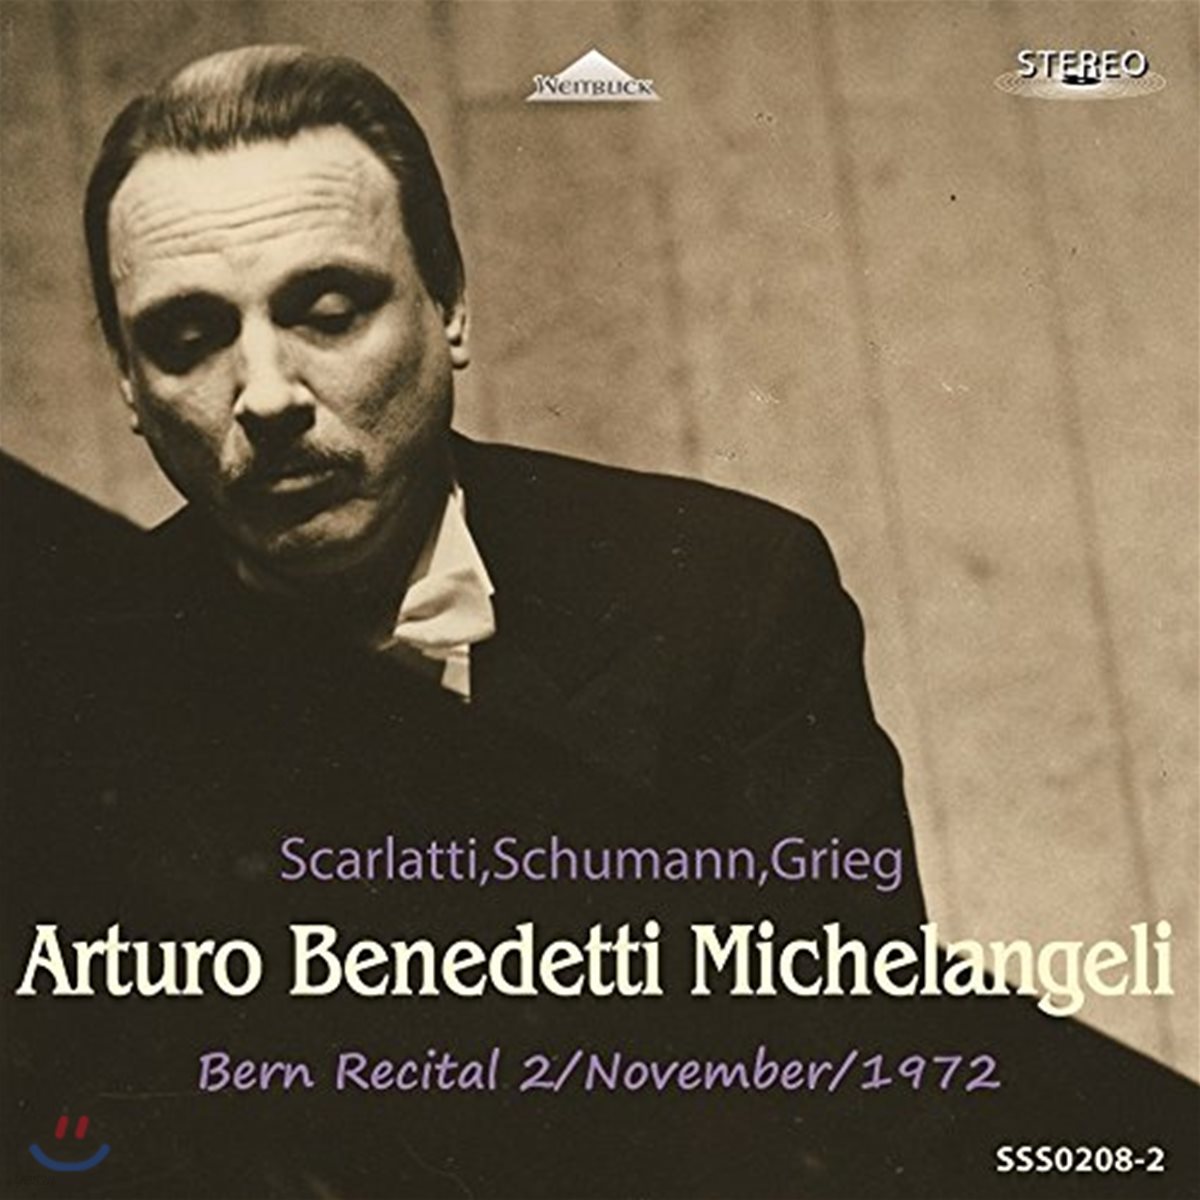 Arturo Benedetti Michelangeli 아르투로 베네데티 미켈란젤리 1972년 베른 리사이틀 (Bern Recital 2 November 1972)